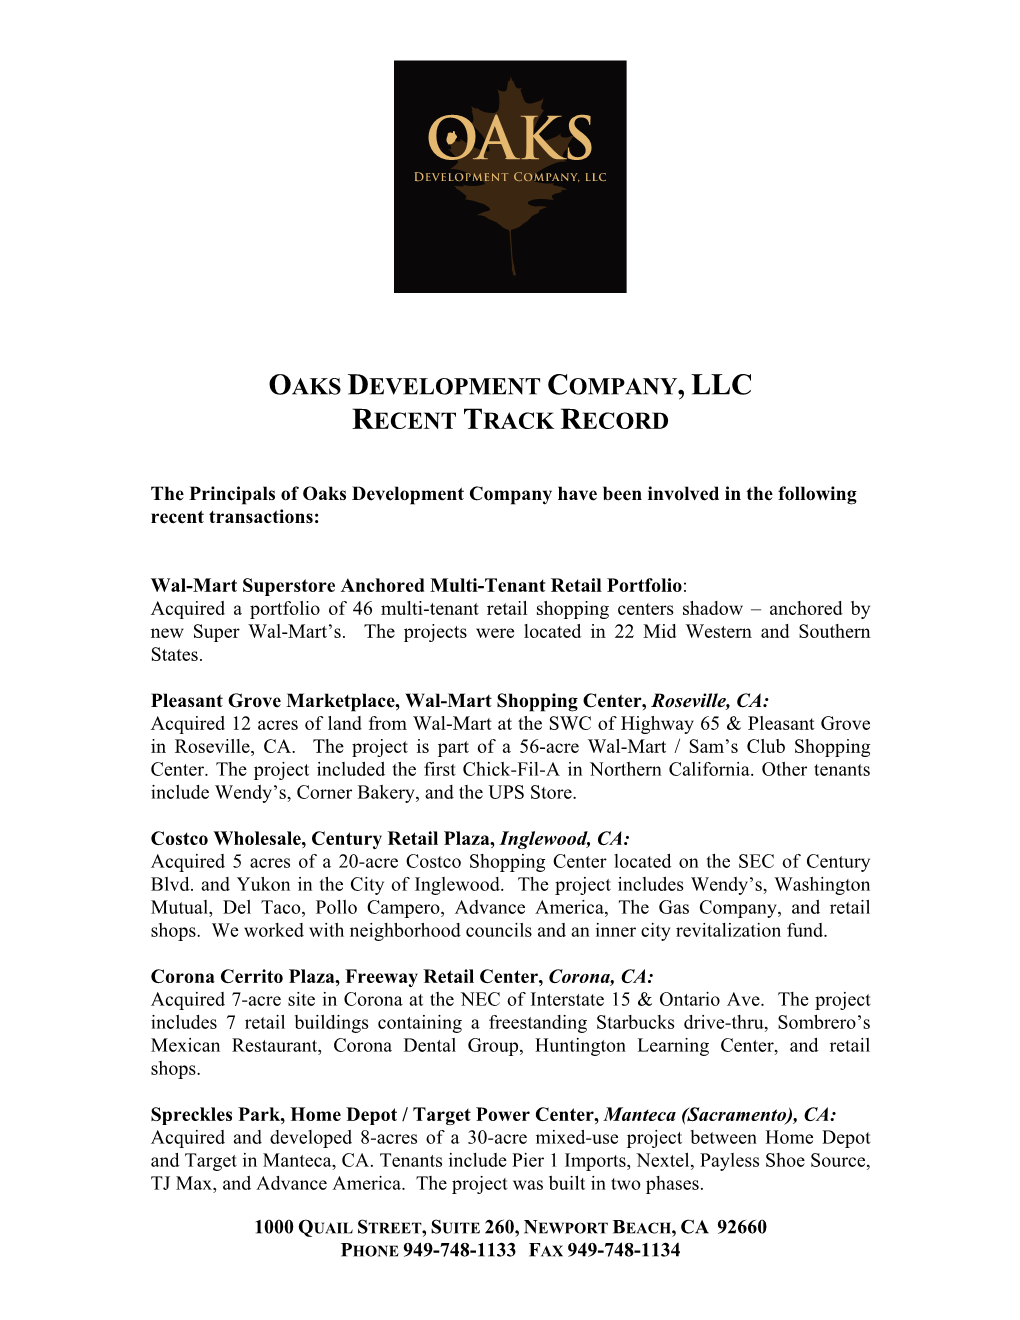 Oaks Development Company, Llc Recent Track Record